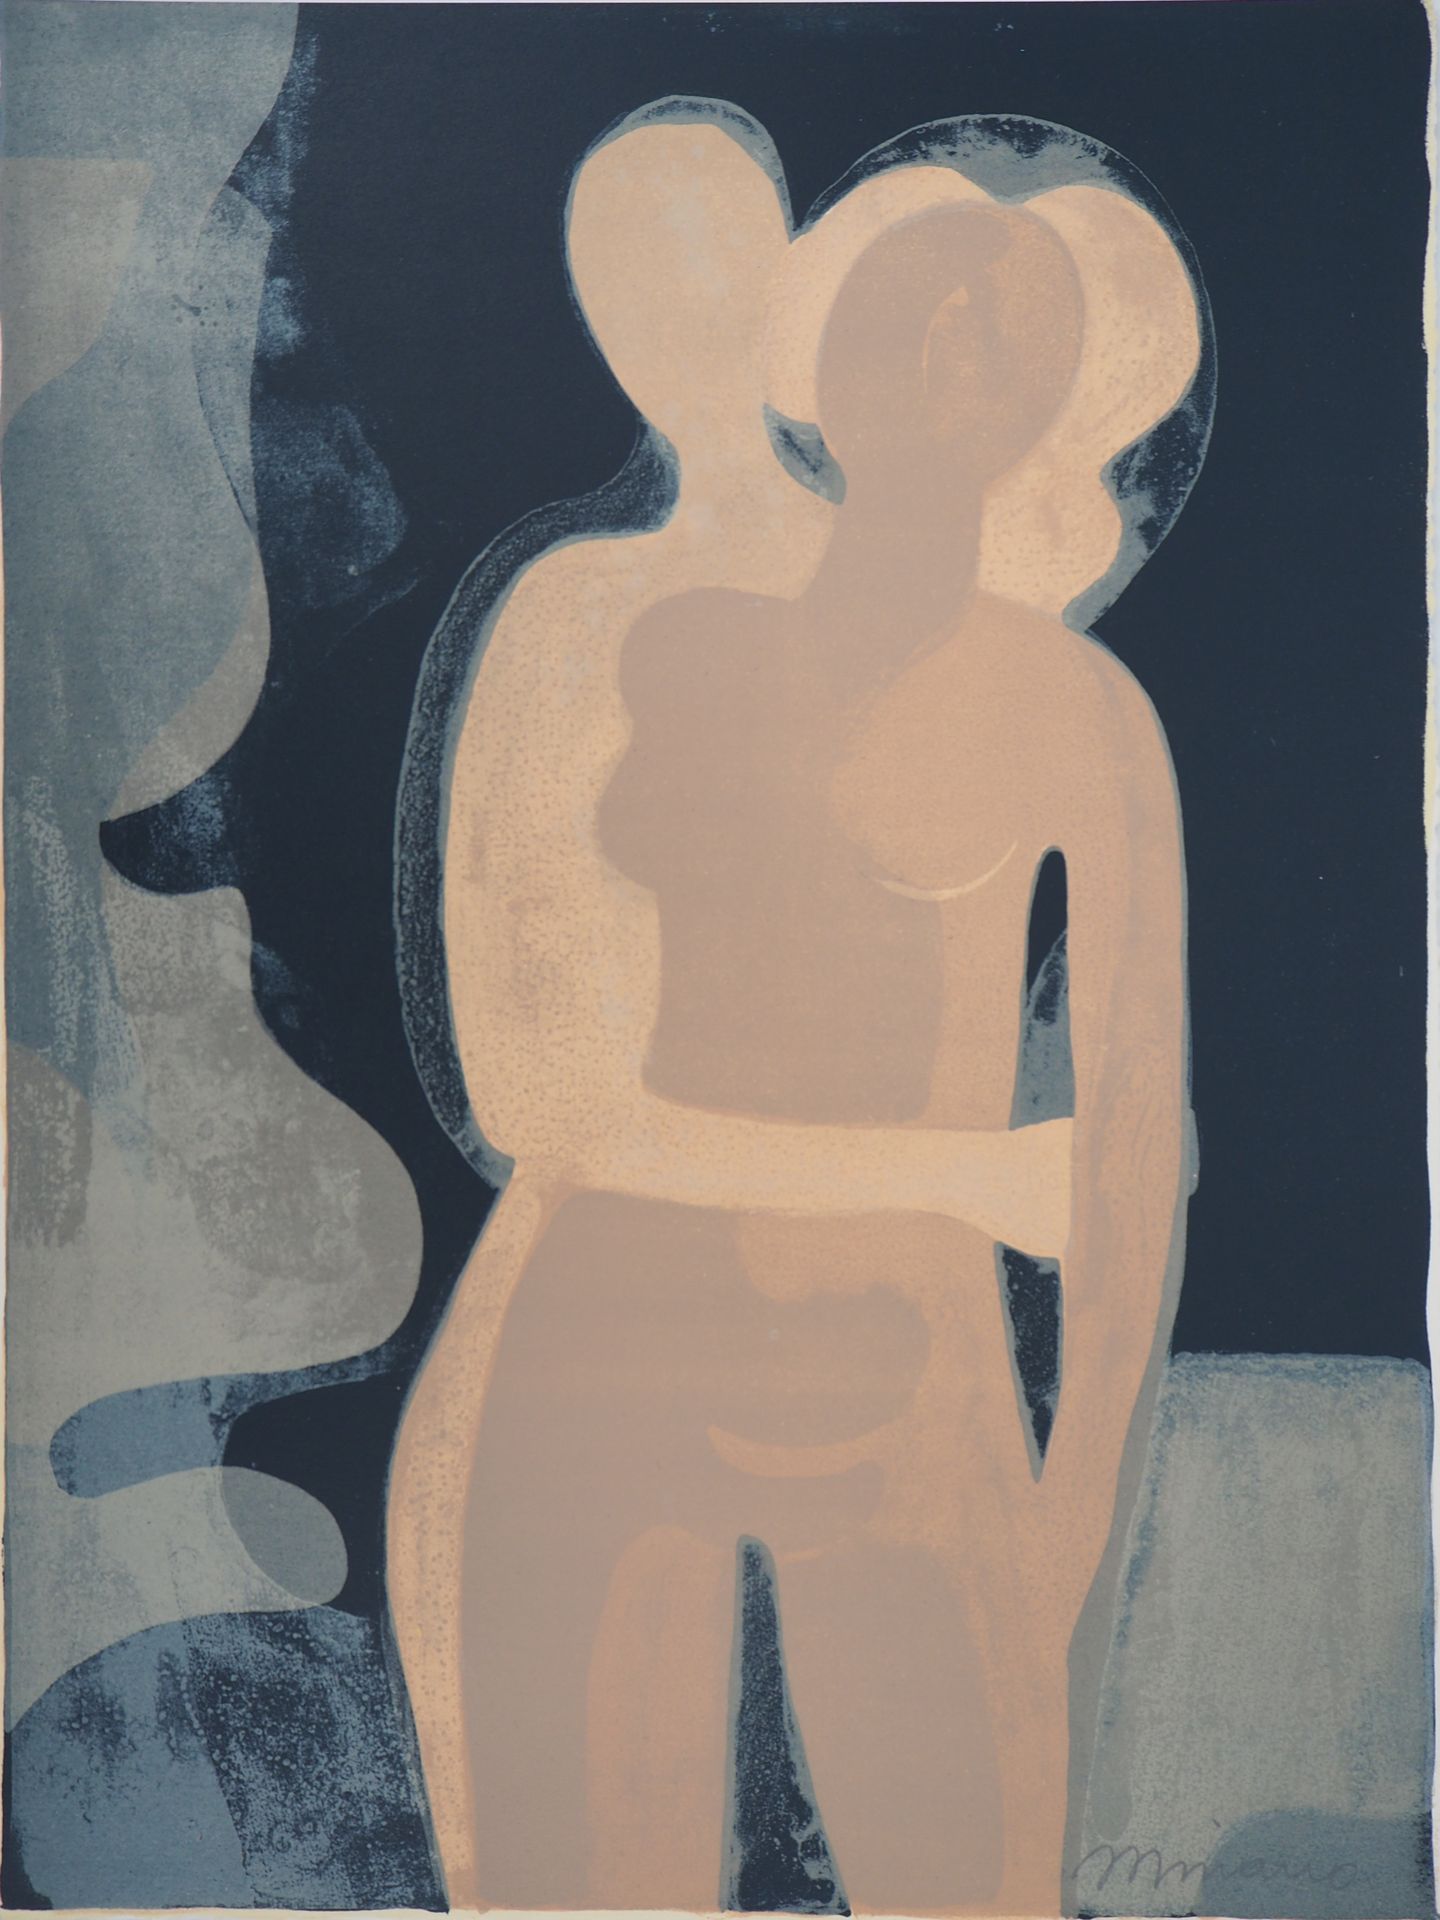 André MINAUX André MINAUX

黑夜中的拥抱，1966年

原始石版画

用铅笔签名

在Rives牛皮纸上 37 x 28 cm

状况&hellip;